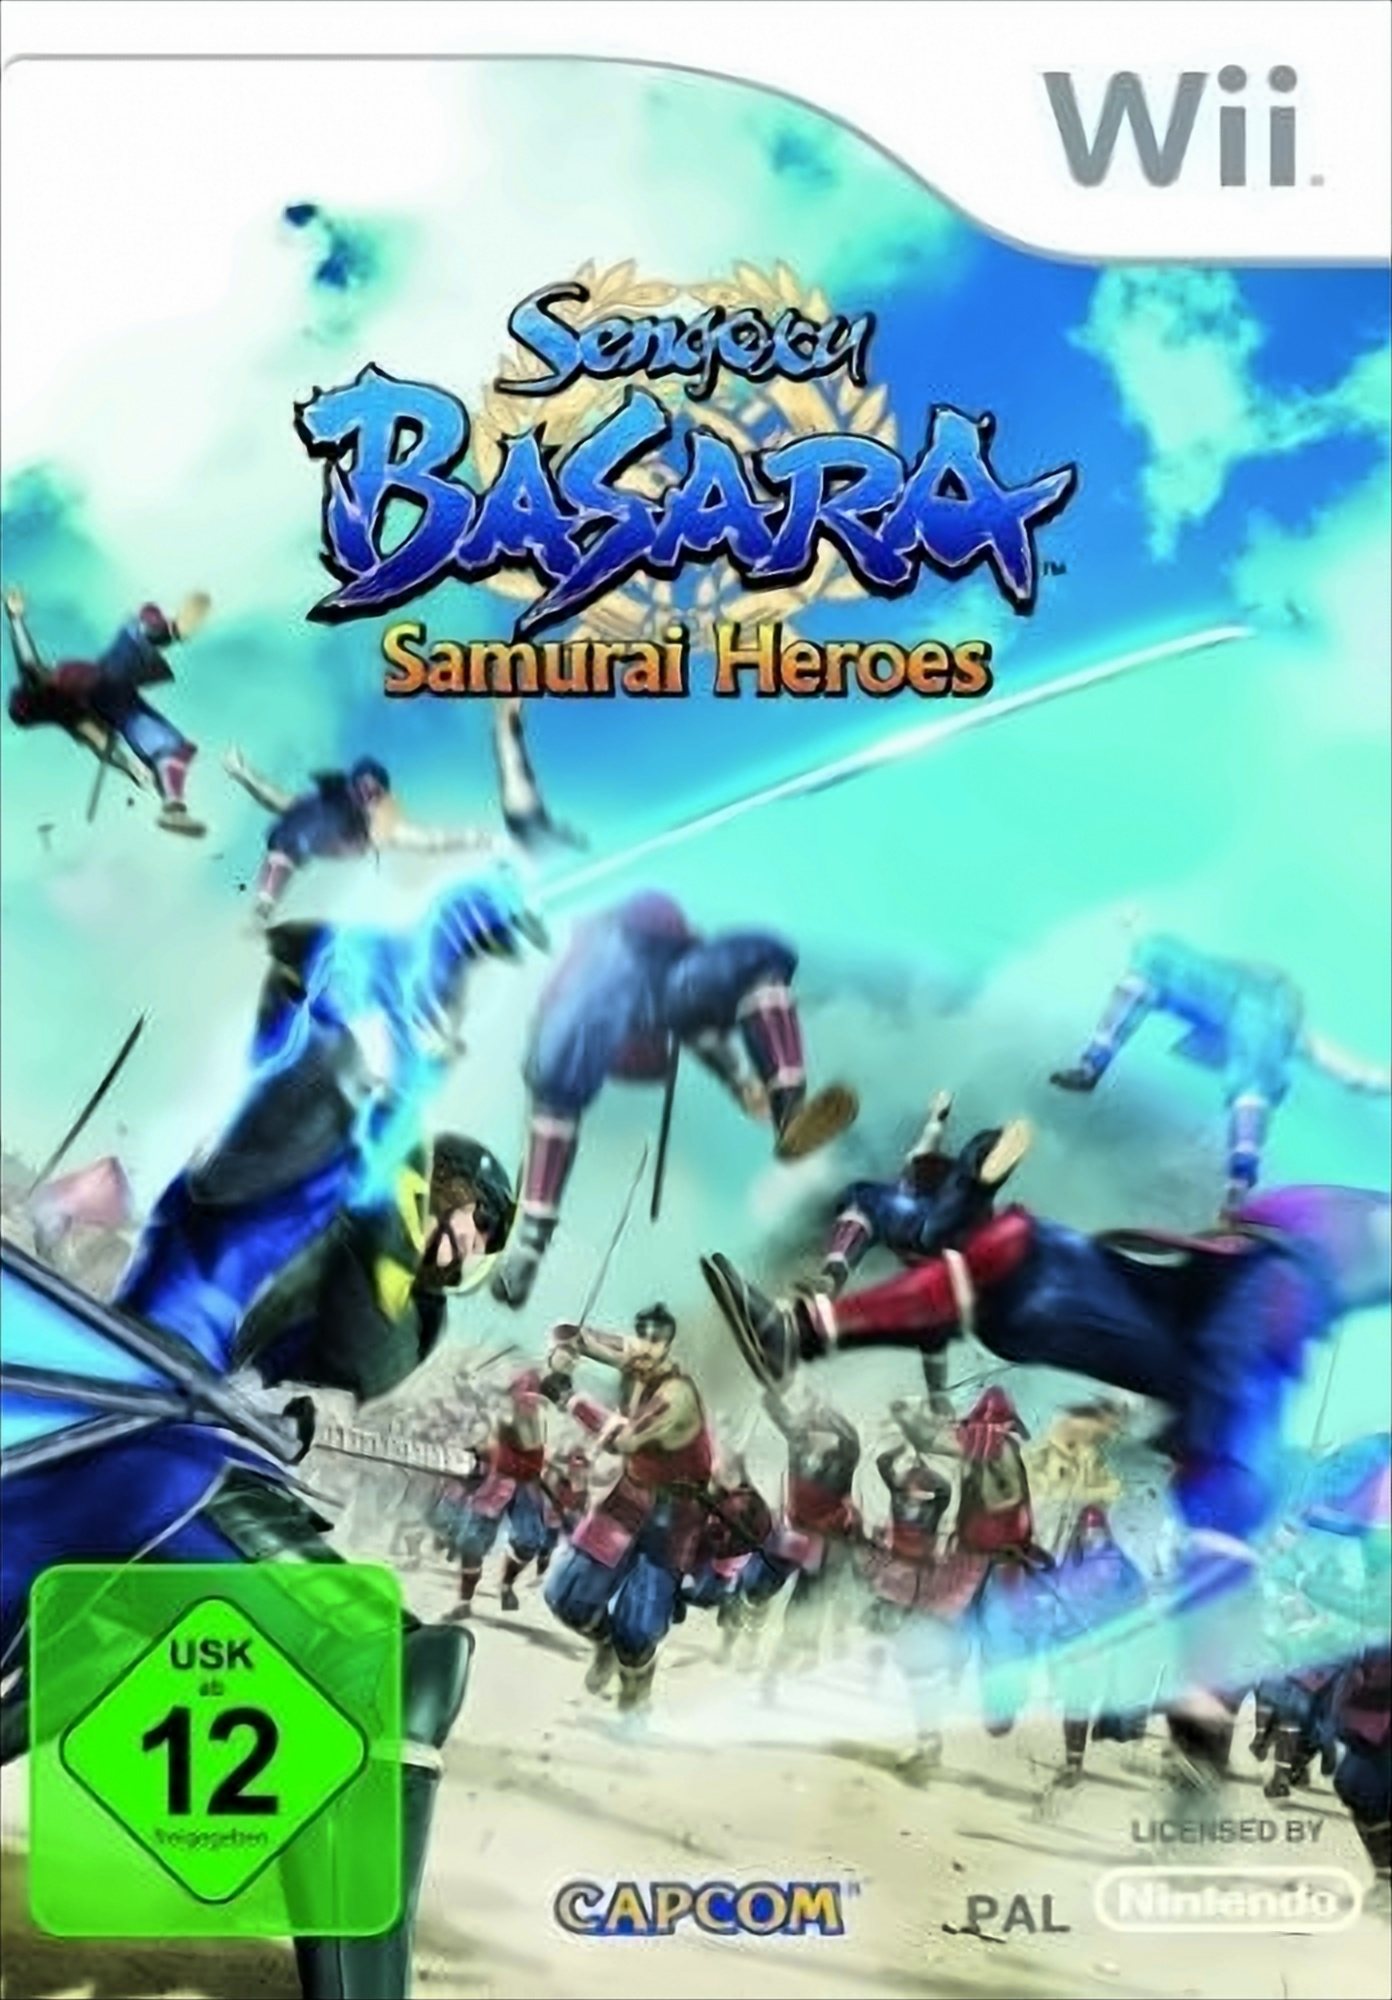 - Samurai Heroes Wii] Sengoku [Nintendo BASARA: